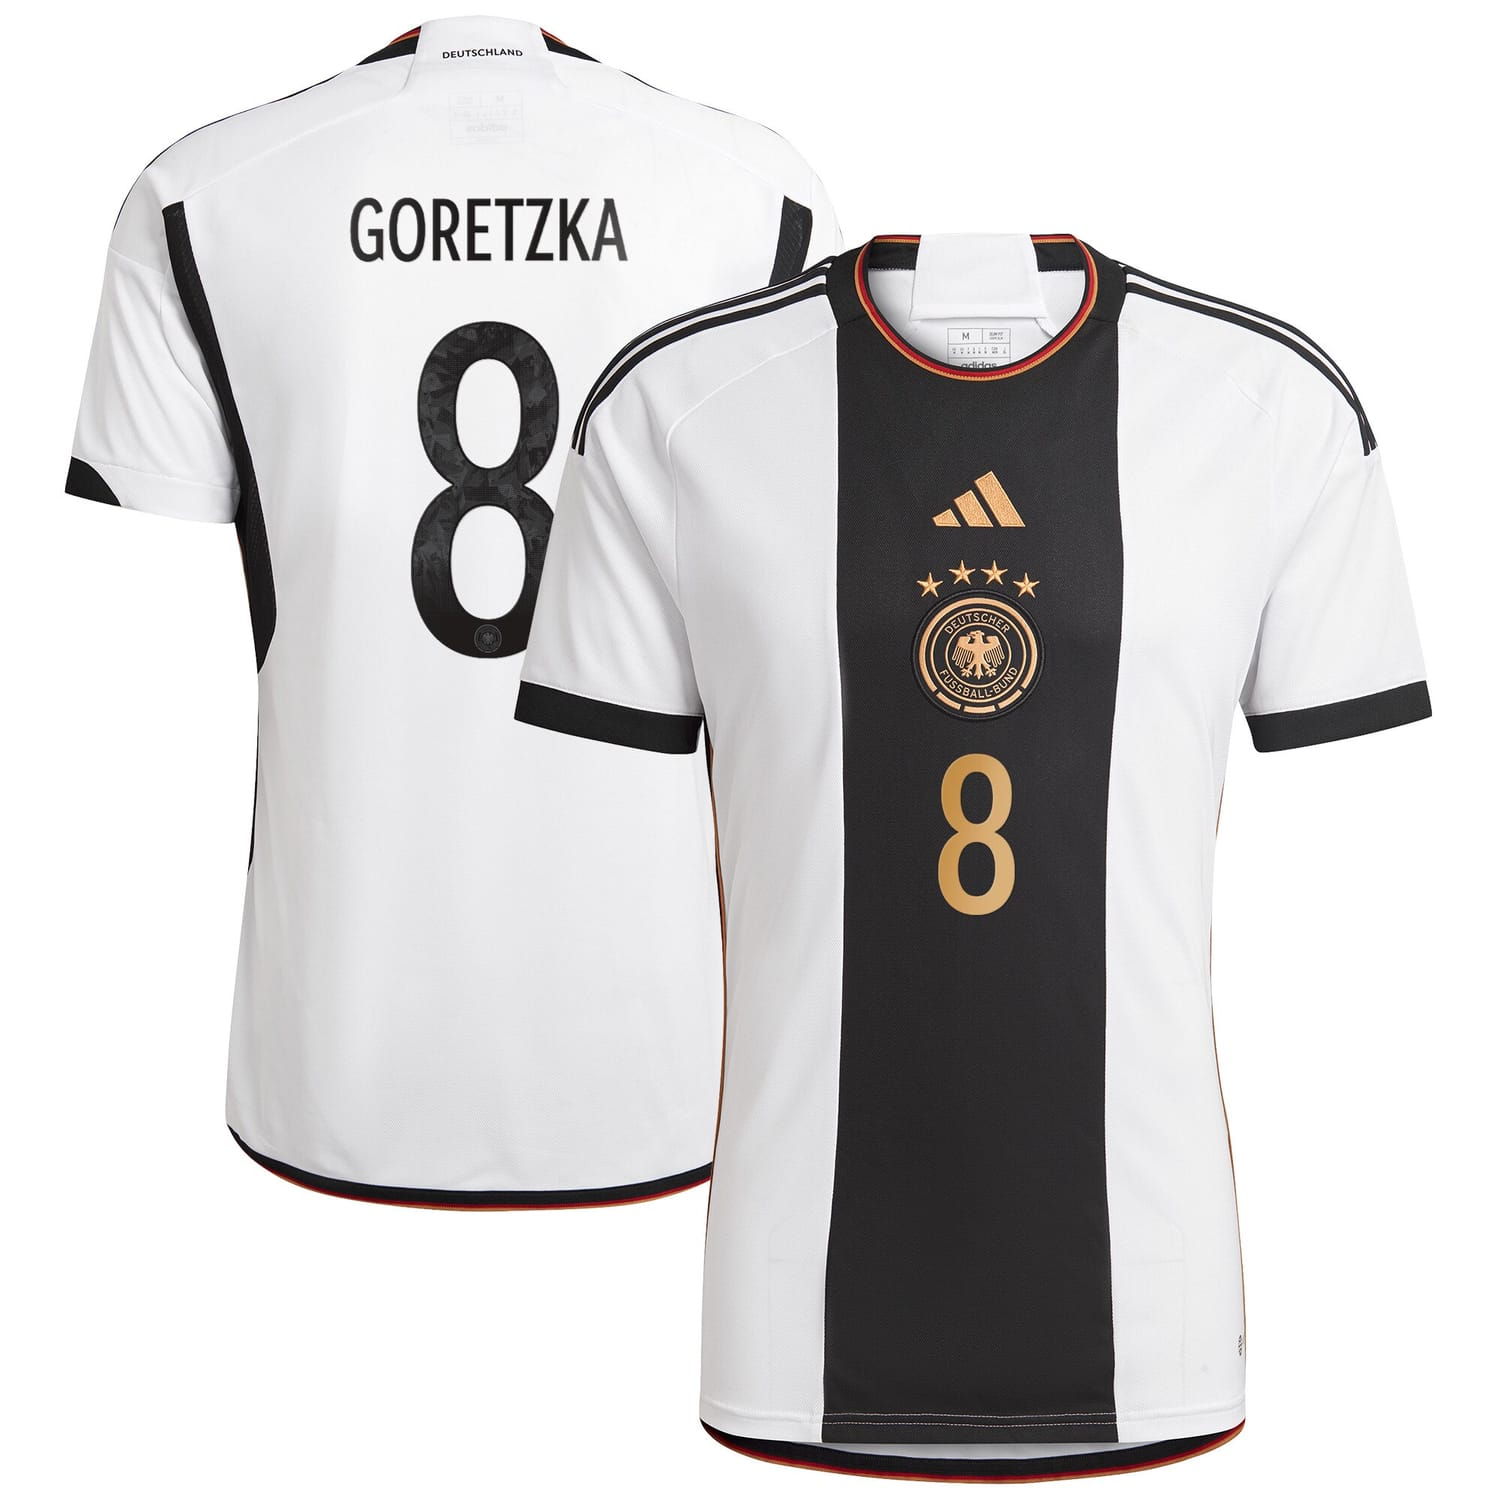 Germany National Team Home Jersey Shirt player Leon Goretzka 8 printing for Men